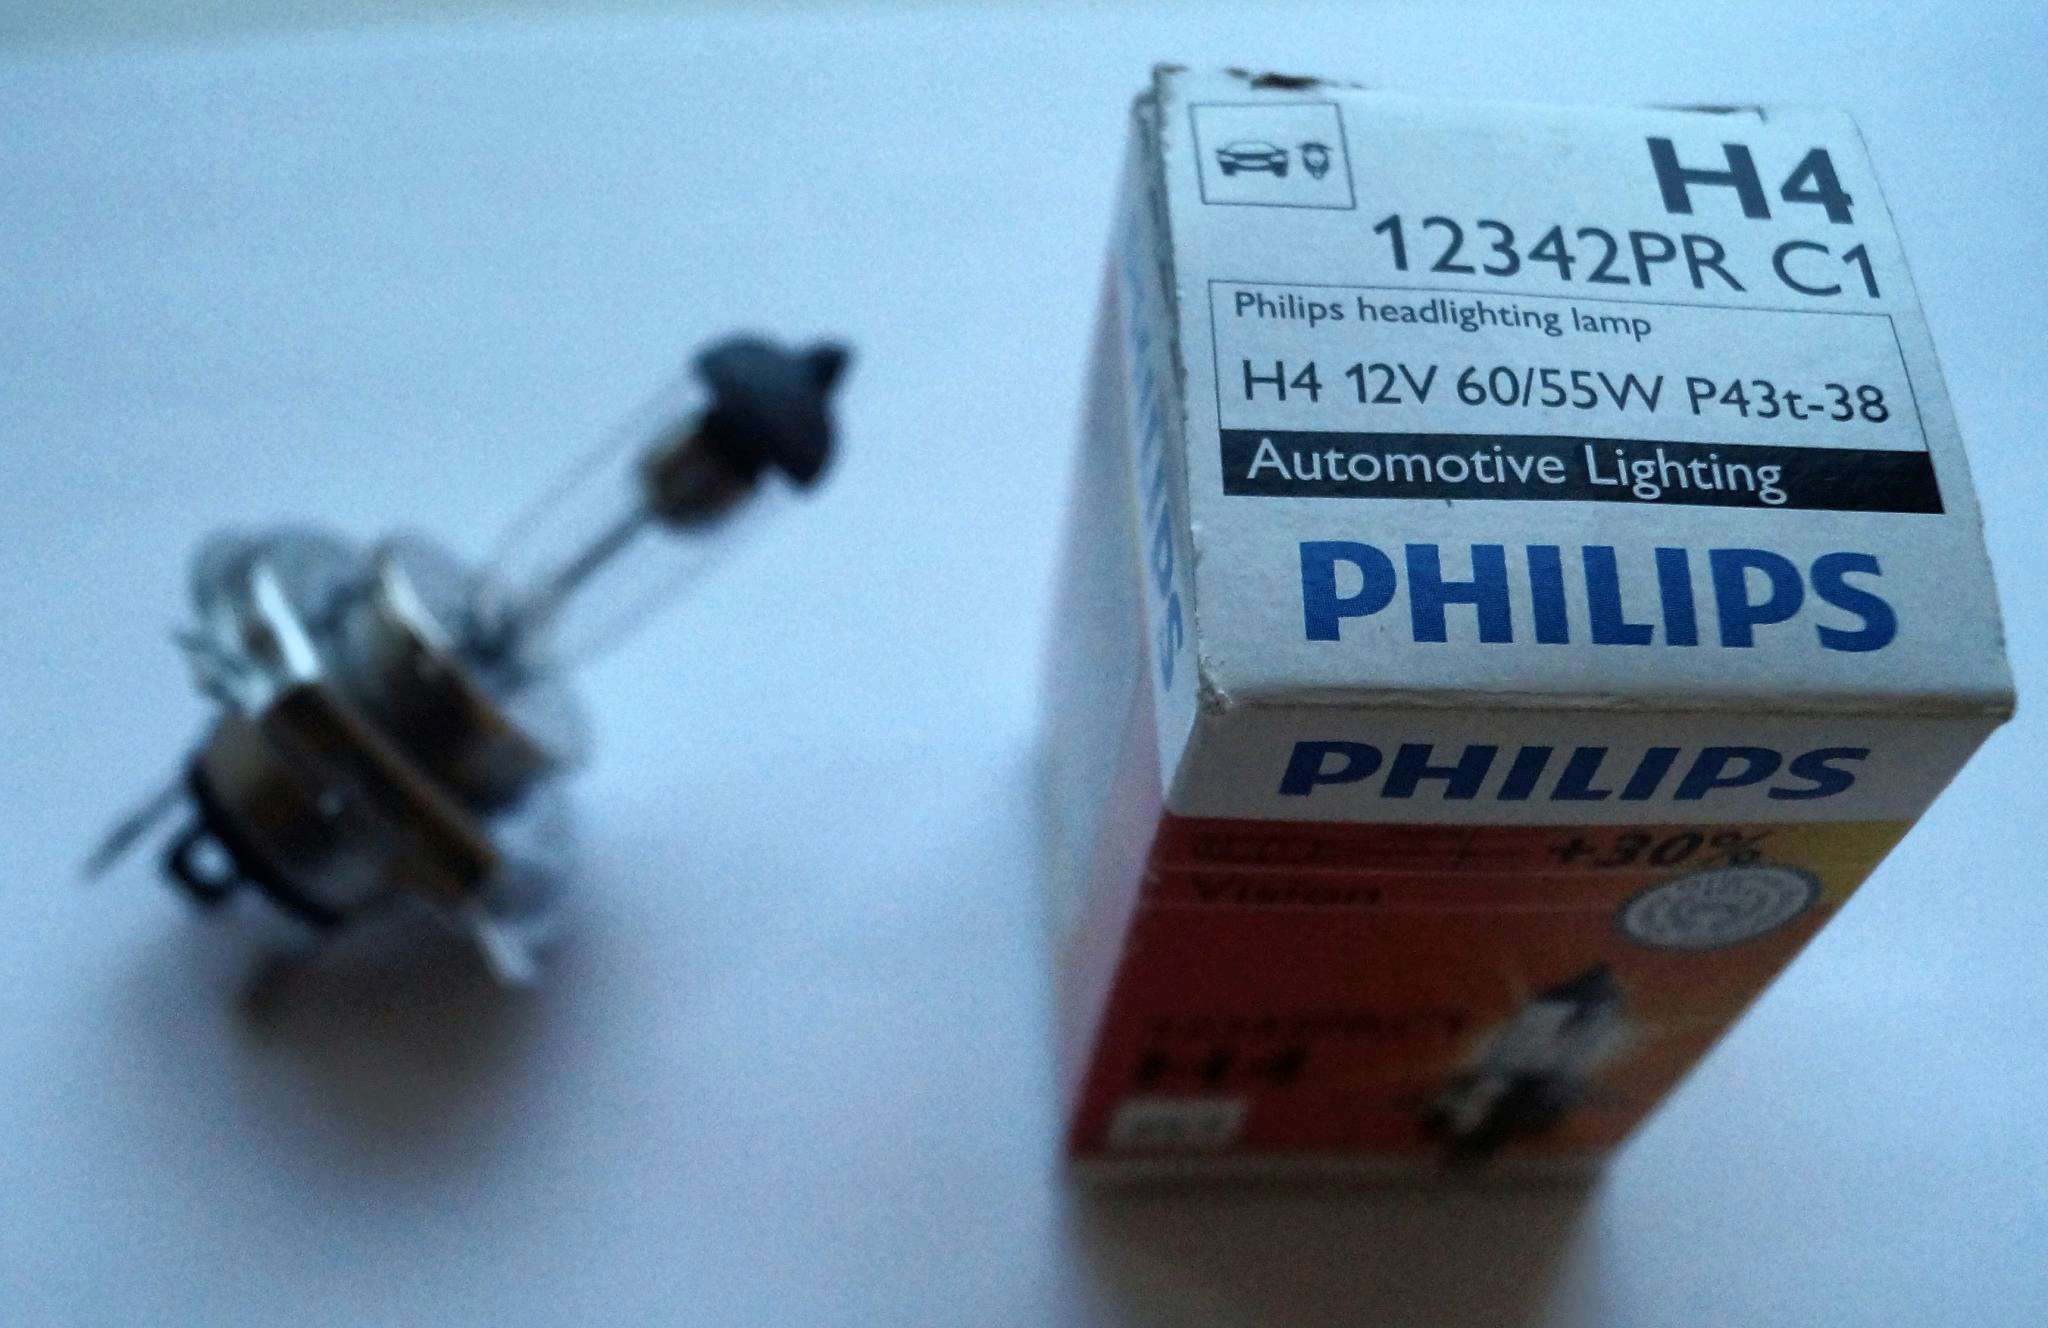 Philips h4 12v 60 55w. Philips h4 12342prc1. Лампа Philips h4 12342prc1. Philips h4 12342prc1 12v 60/55w. Philips h4 12342 12v 60/55w.